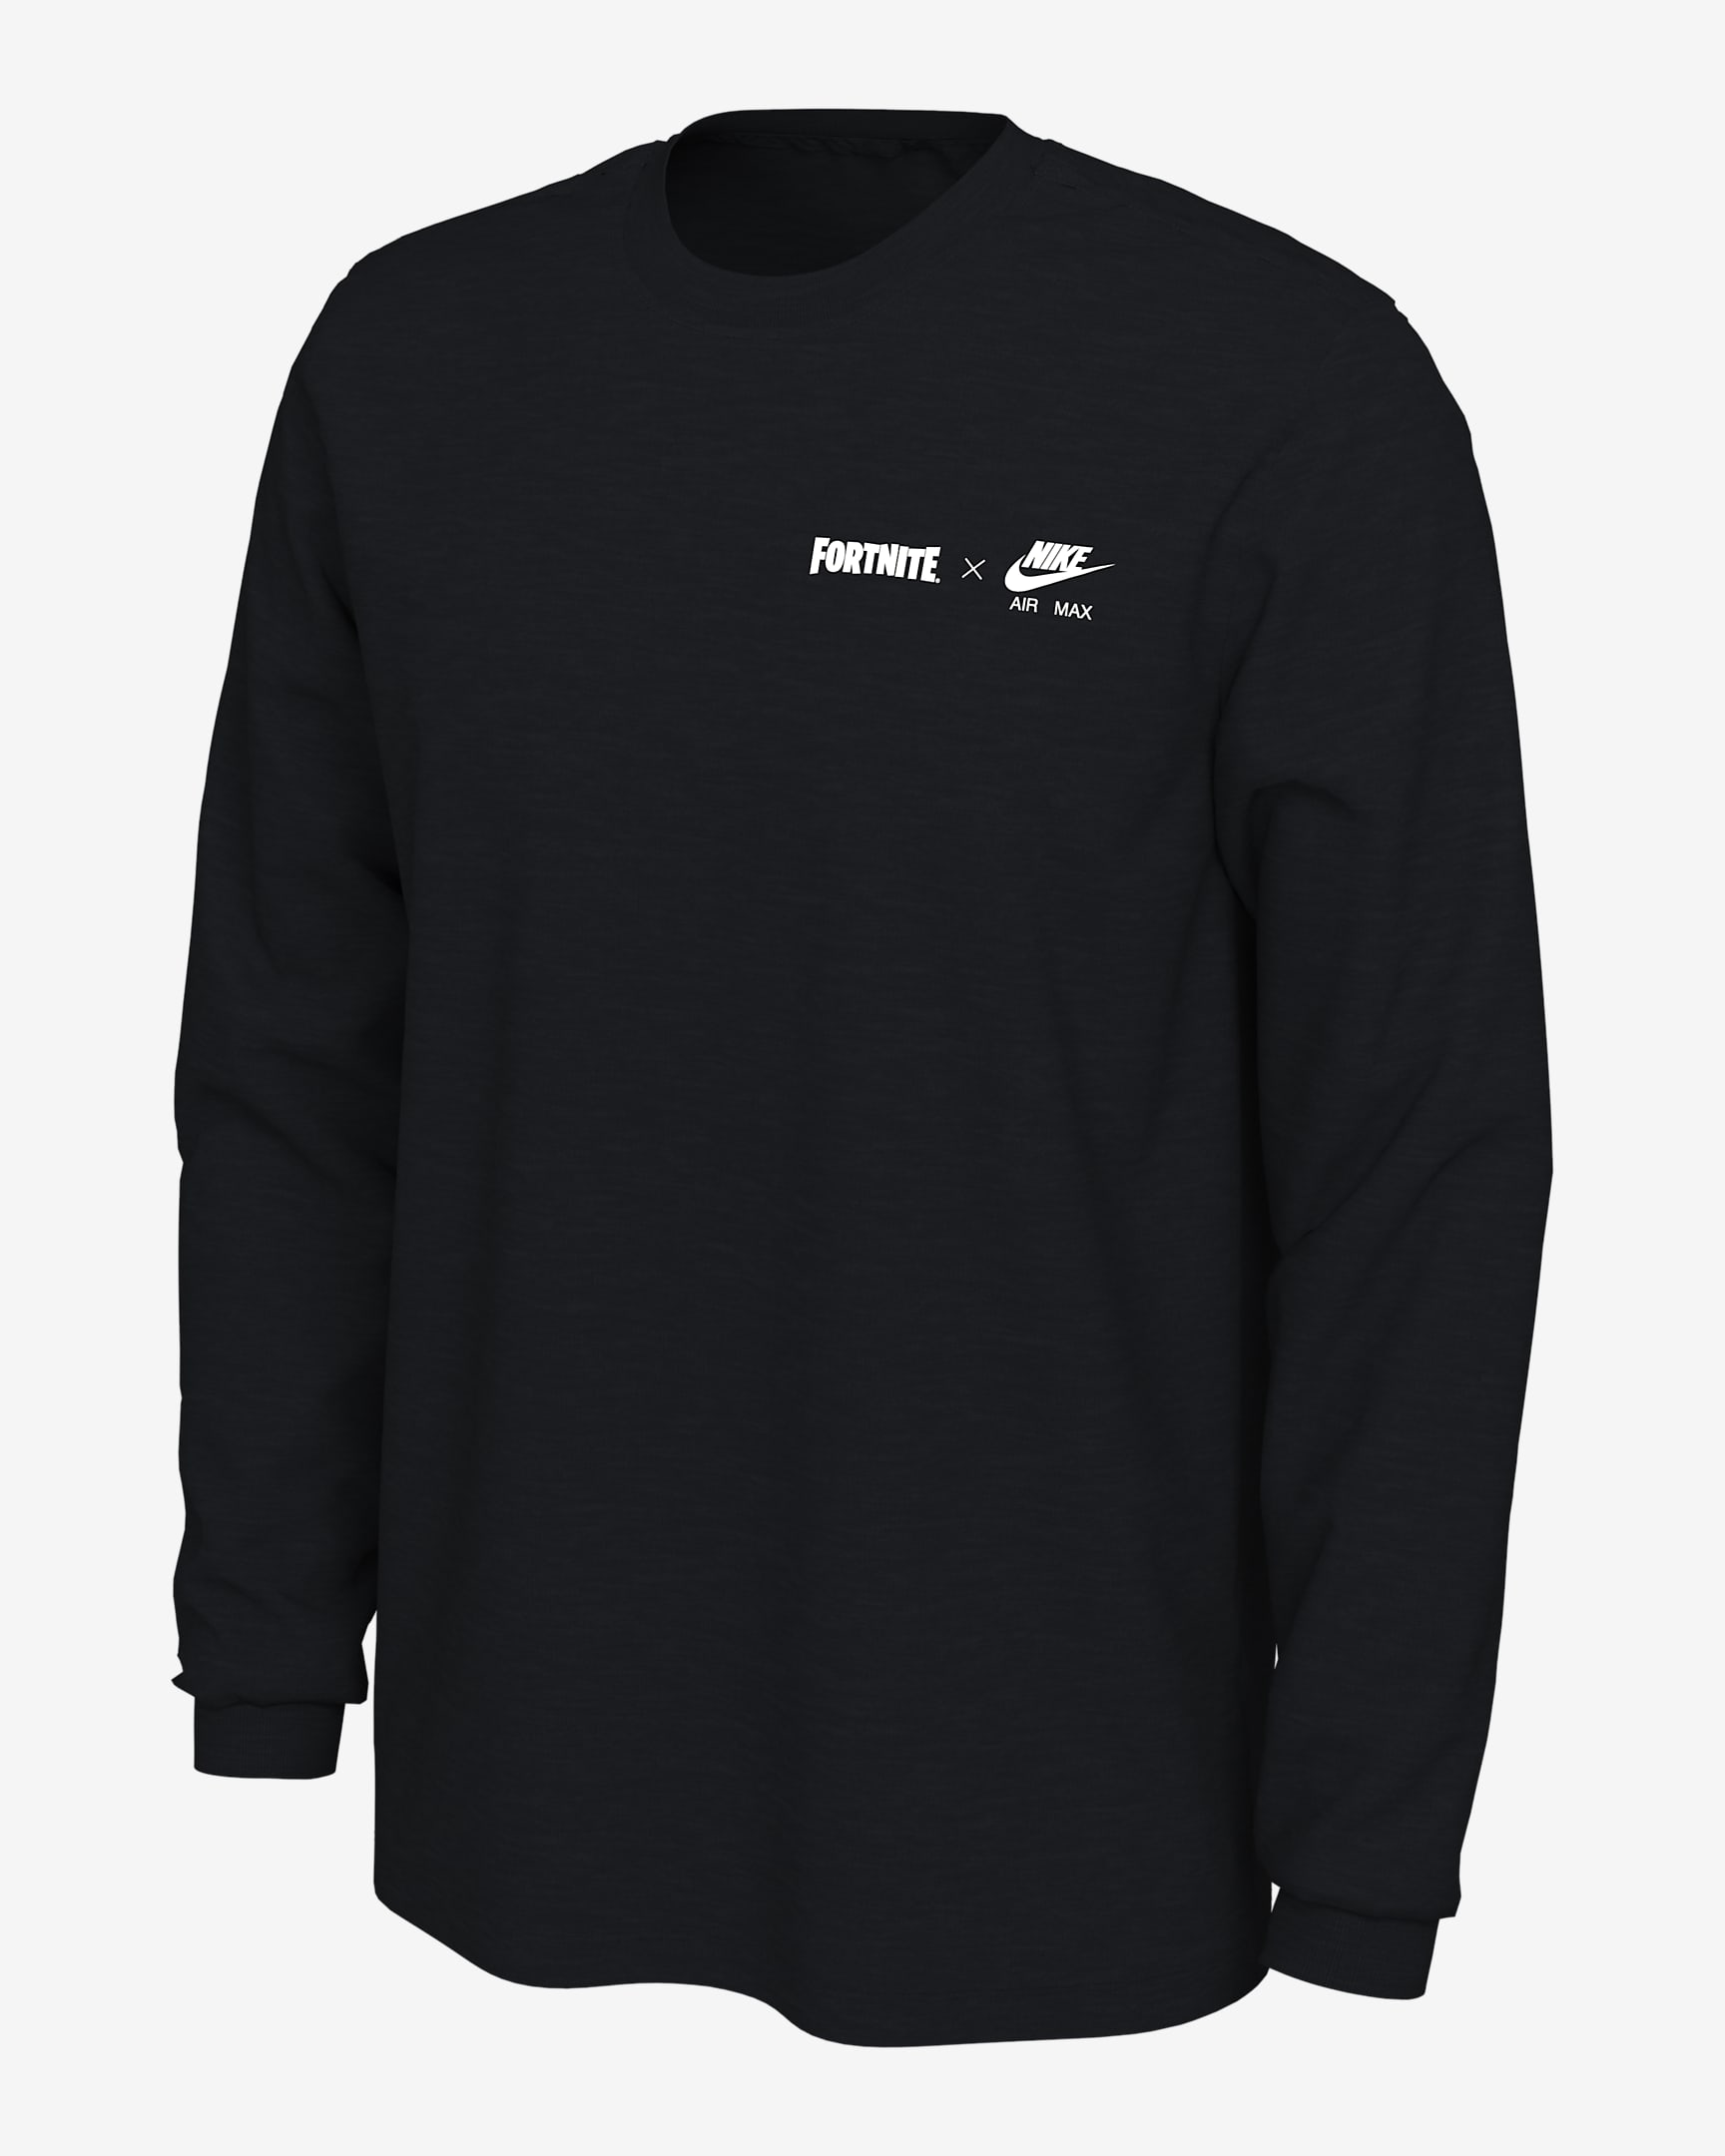 Asado Auroch Tom Audreath Fortnite™ x Nike Air Max Men's Nike Long-Sleeve T-Shirt. Nike.com